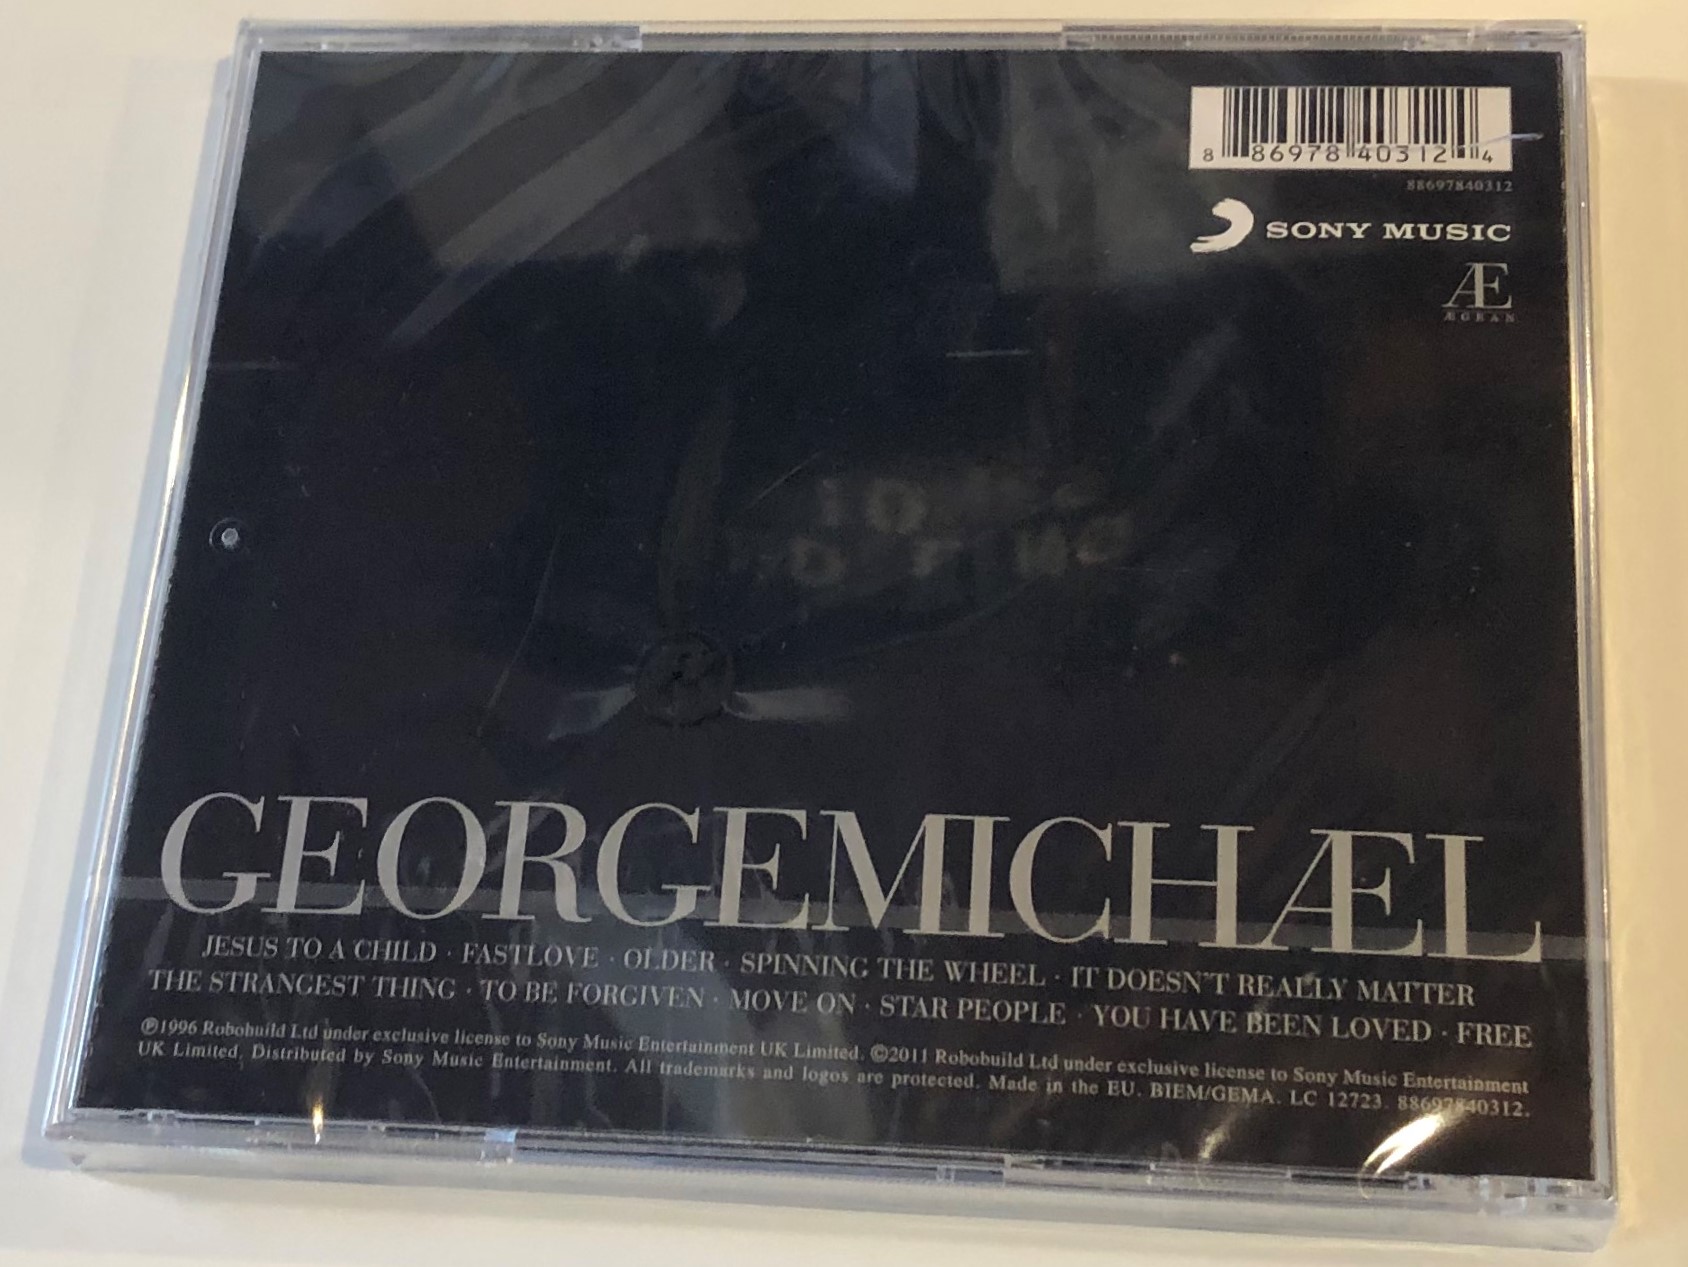 older-george-michael-sony-music-audio-cd-2011-88697840312-2-.jpg